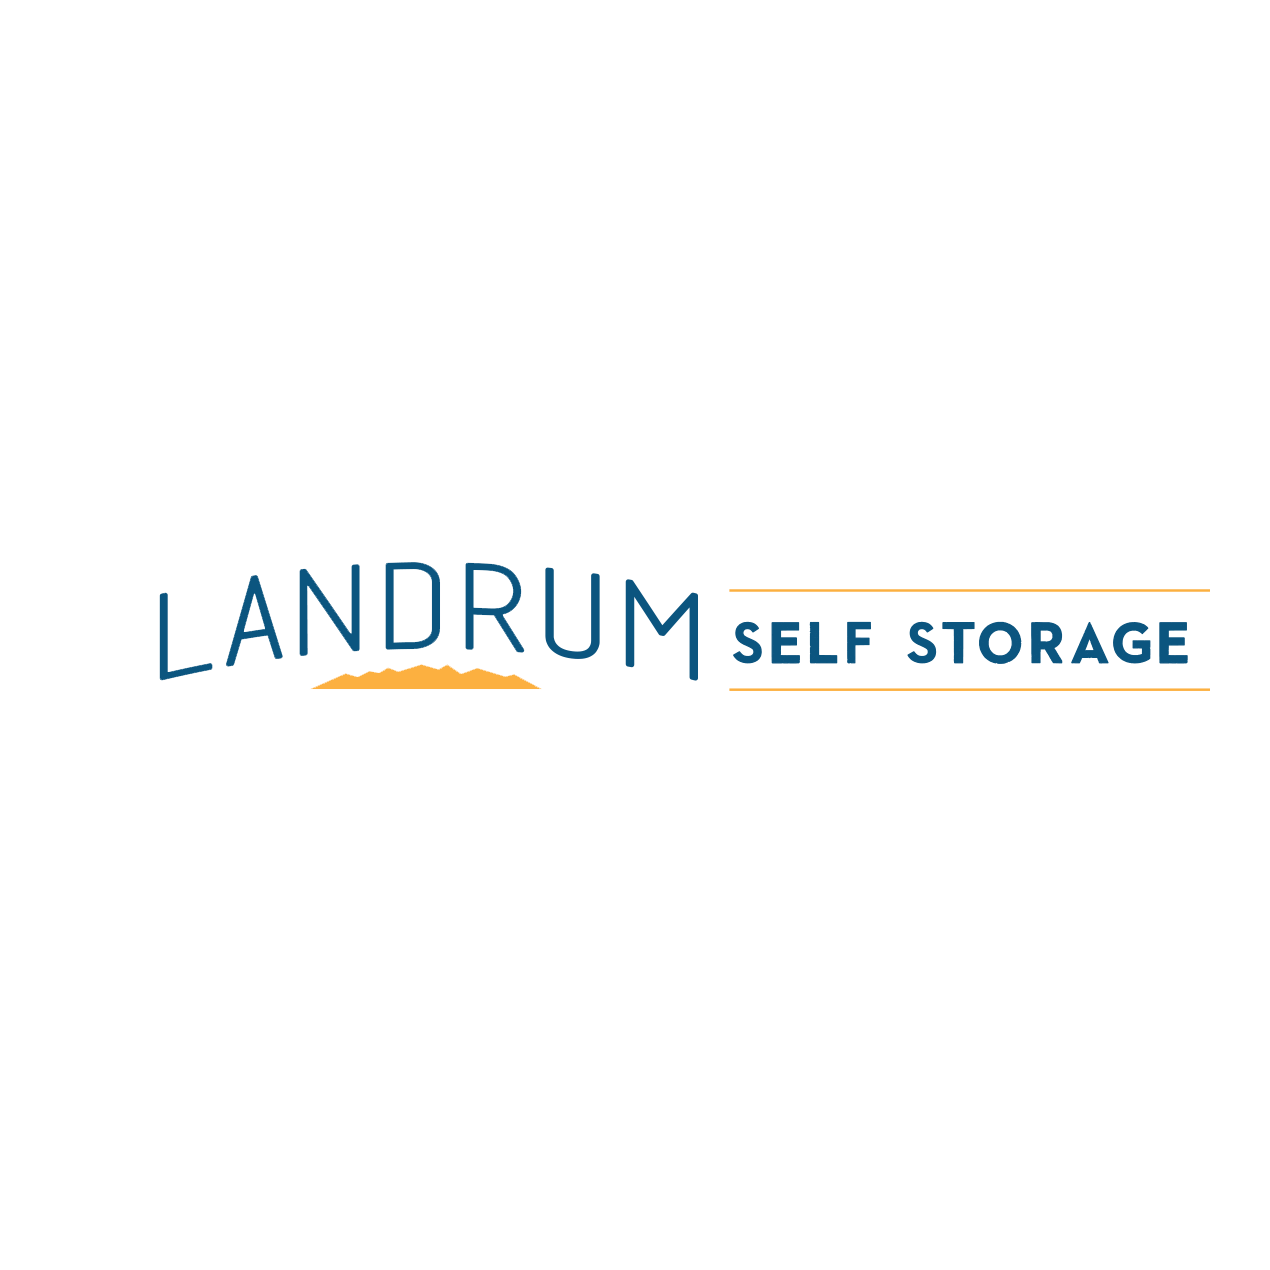 Landrum Self Storage - Landrum, SC 29356 - (864)642-1717 | ShowMeLocal.com